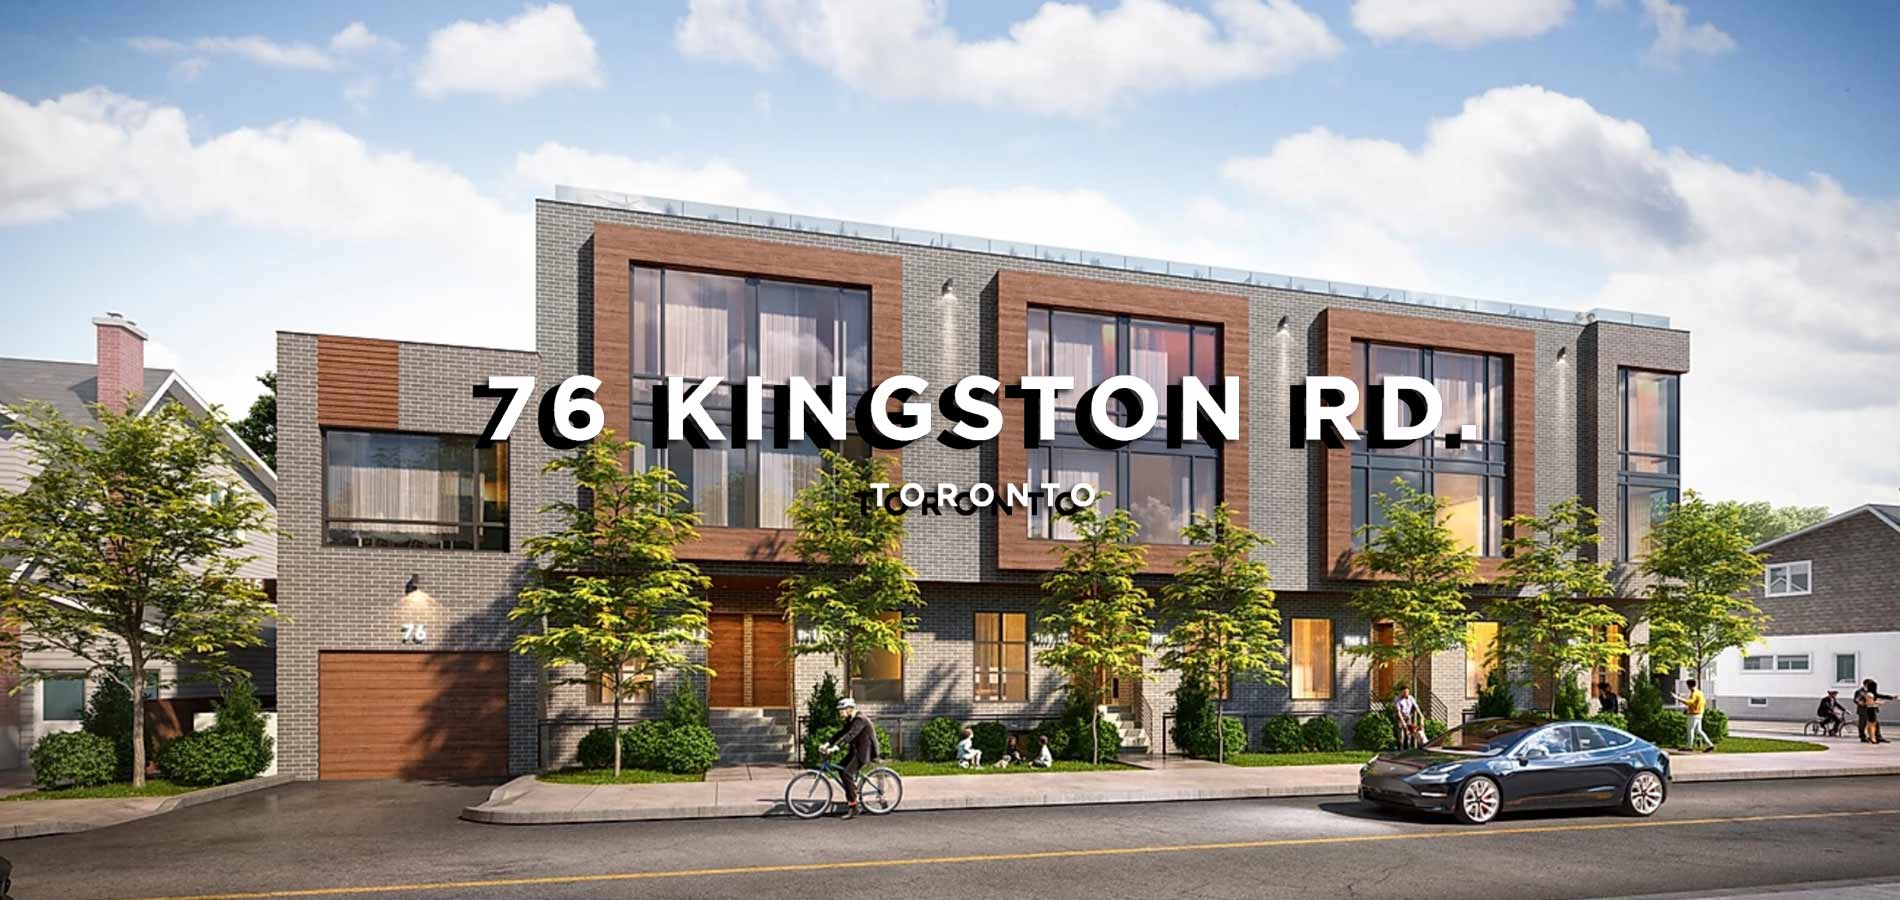 76 Kingston Road Townhomes